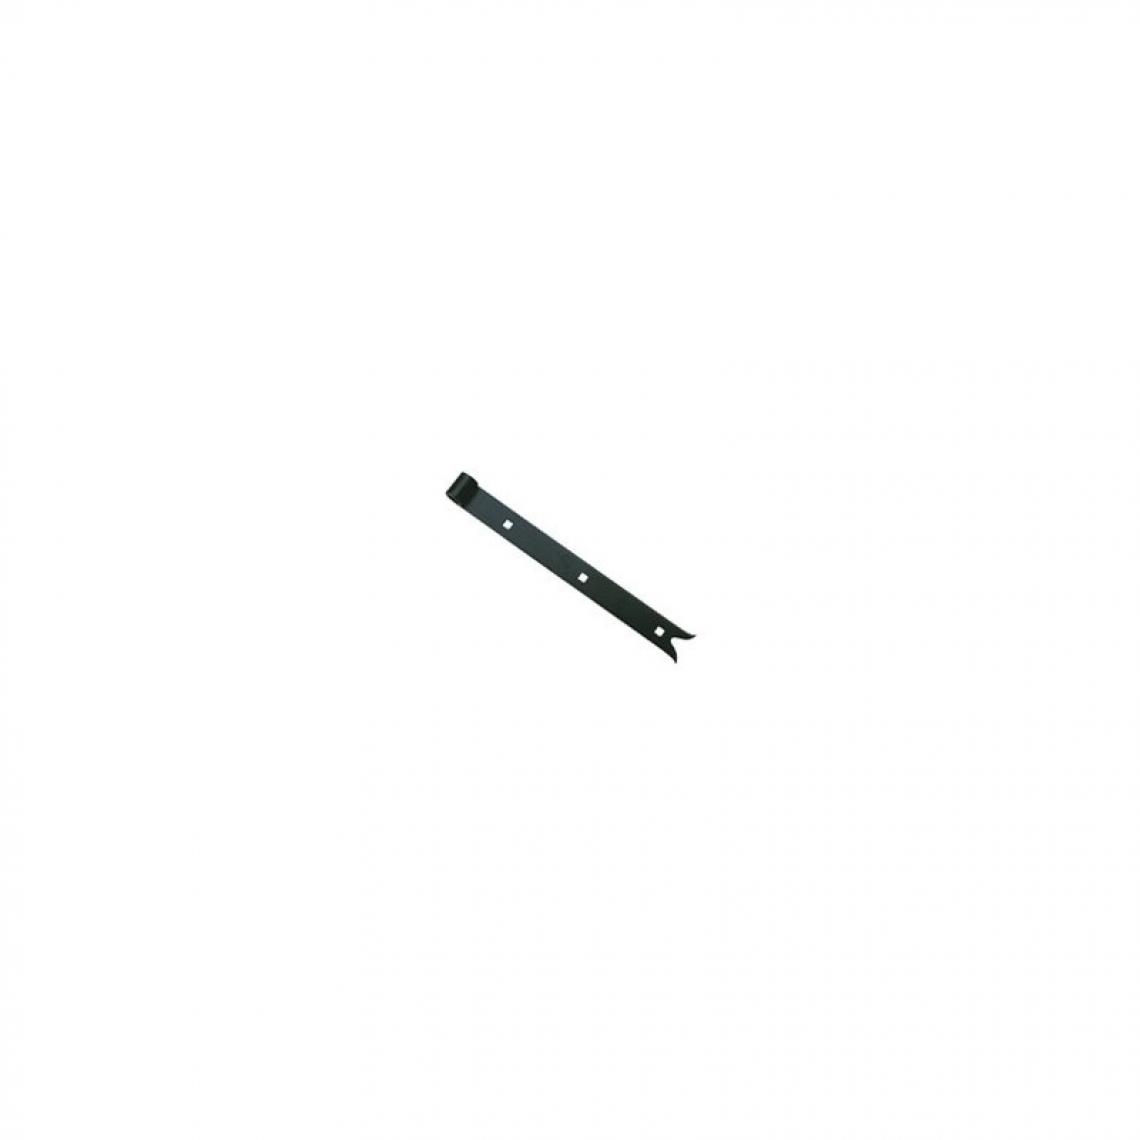 Itar - Penture queue de carpe - Diamètre il : 14 mm - Section : 30 x 5 mm - Longueur : 400 mm - ITAR - Carreaux de plâtre